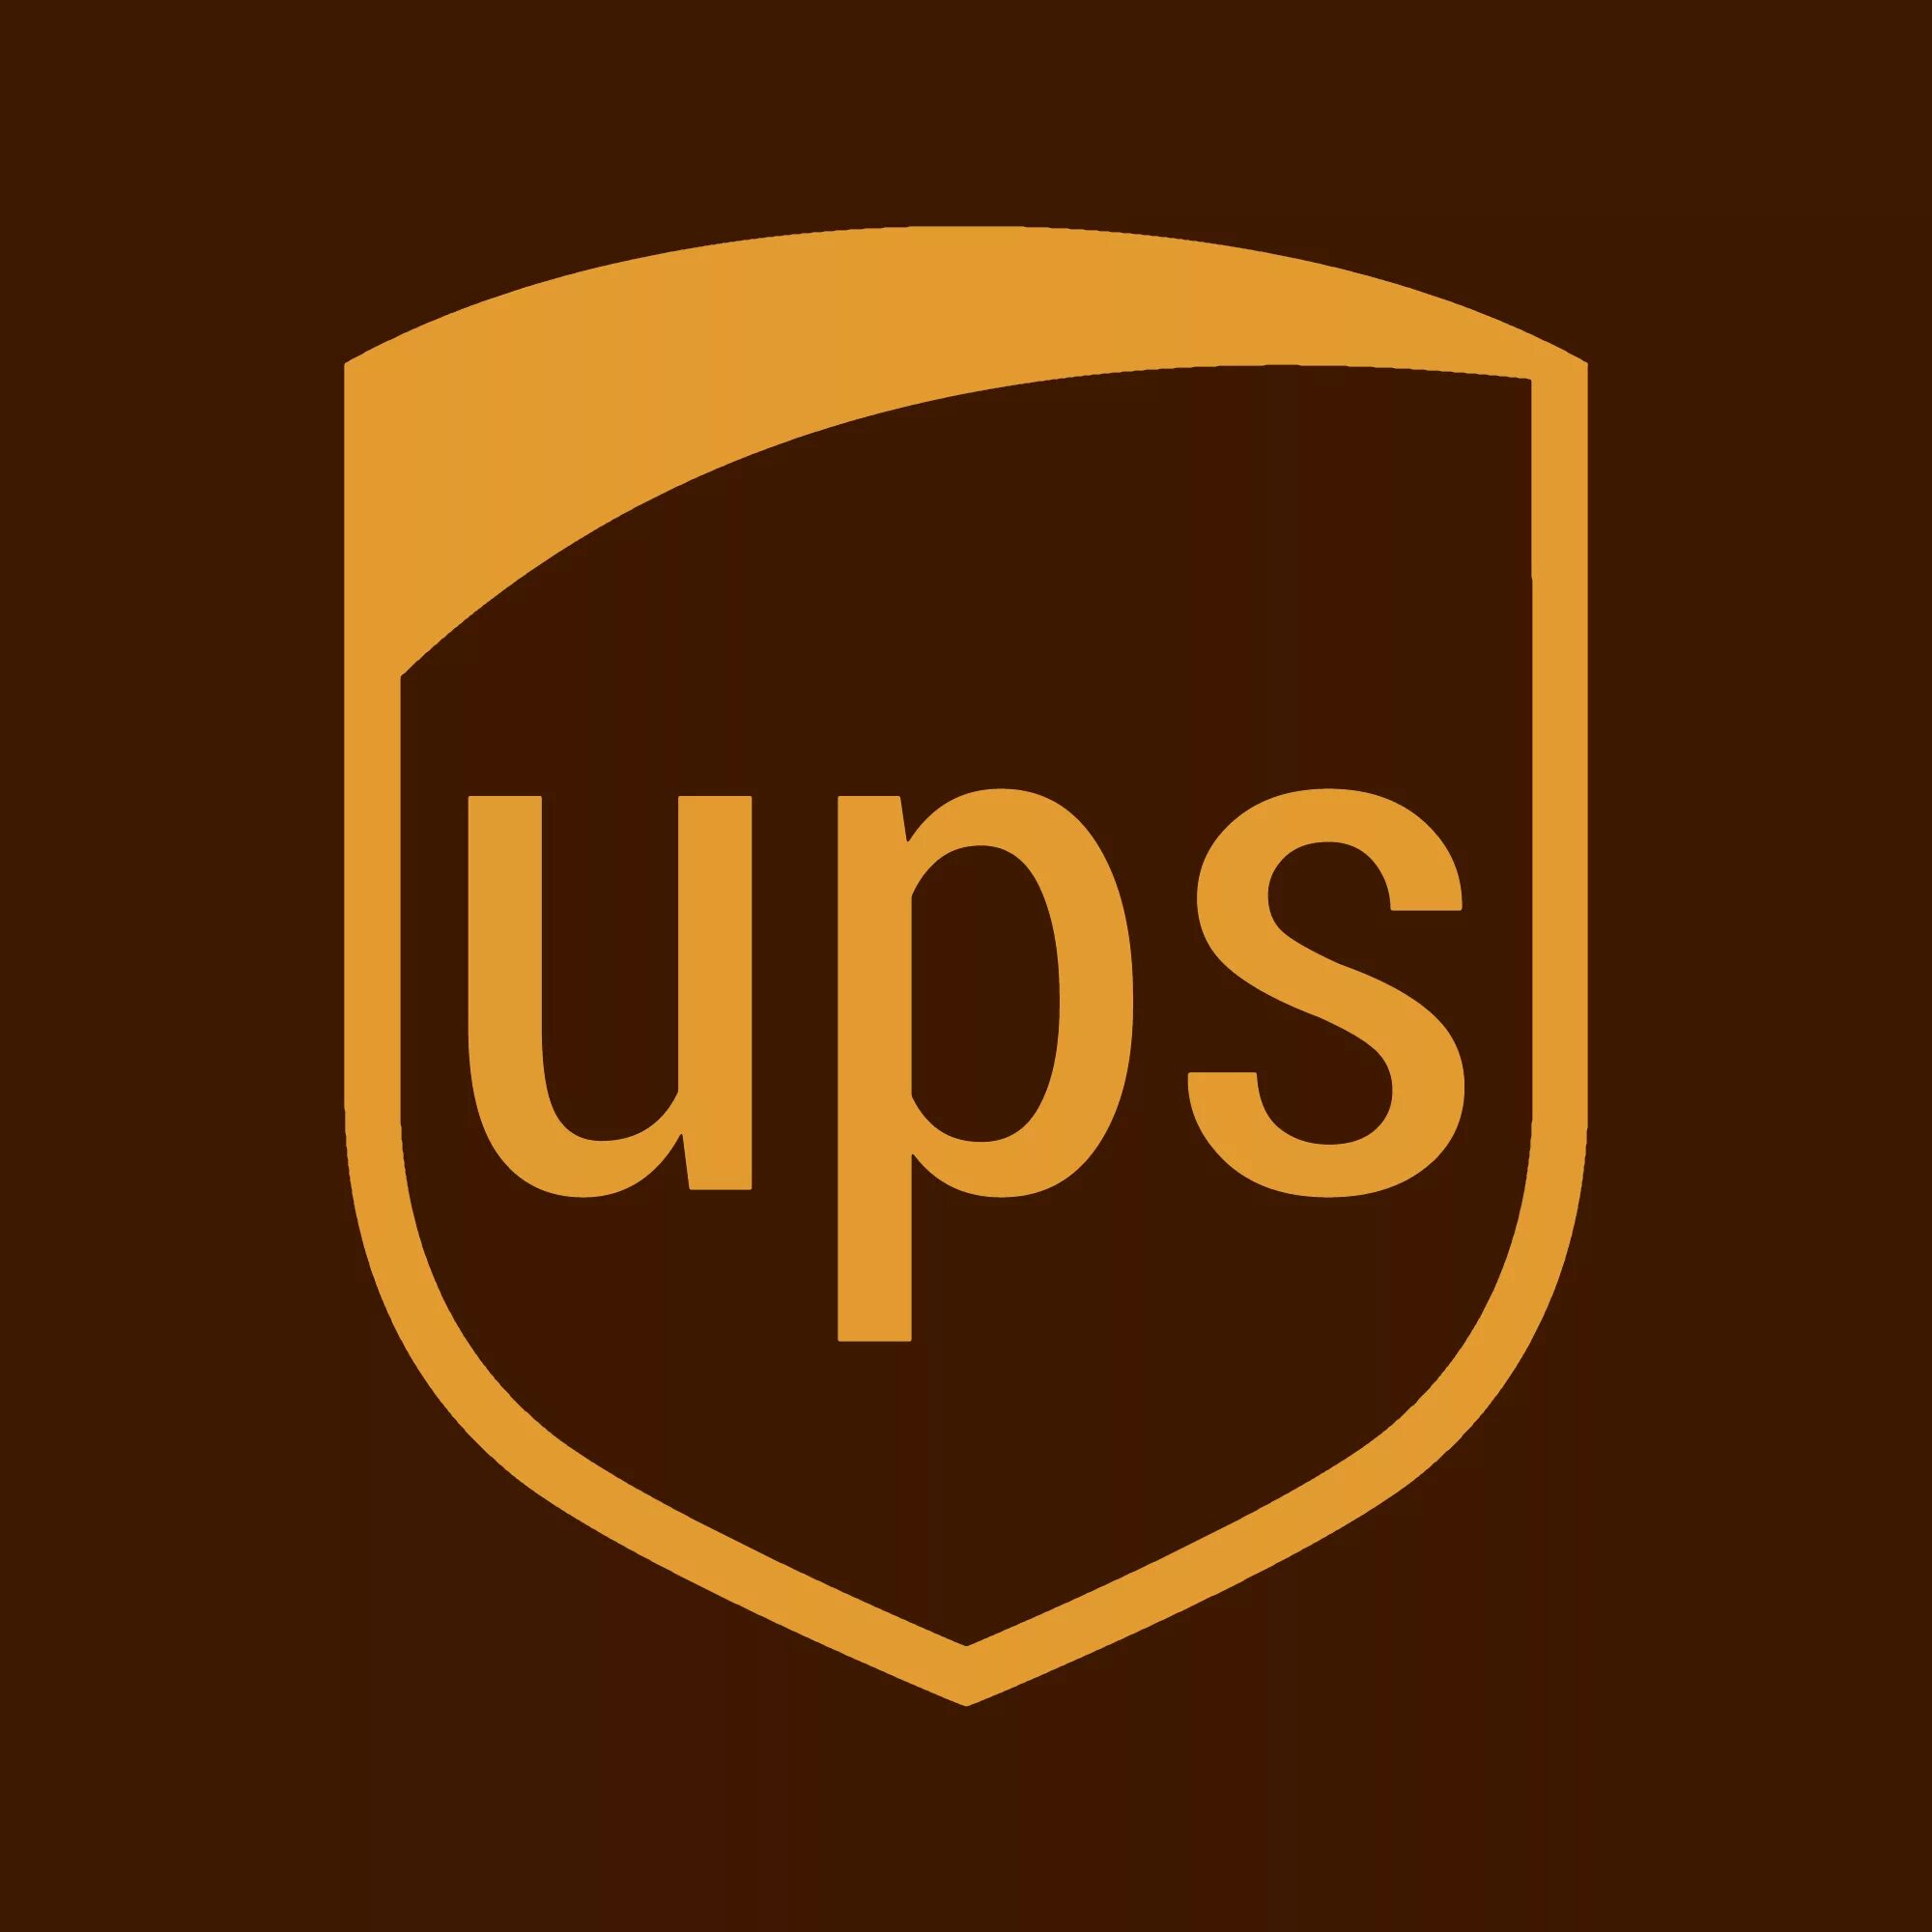 Ups. Компания ups. Логотип ЮПС. Курьерская служба ups. Ups bank